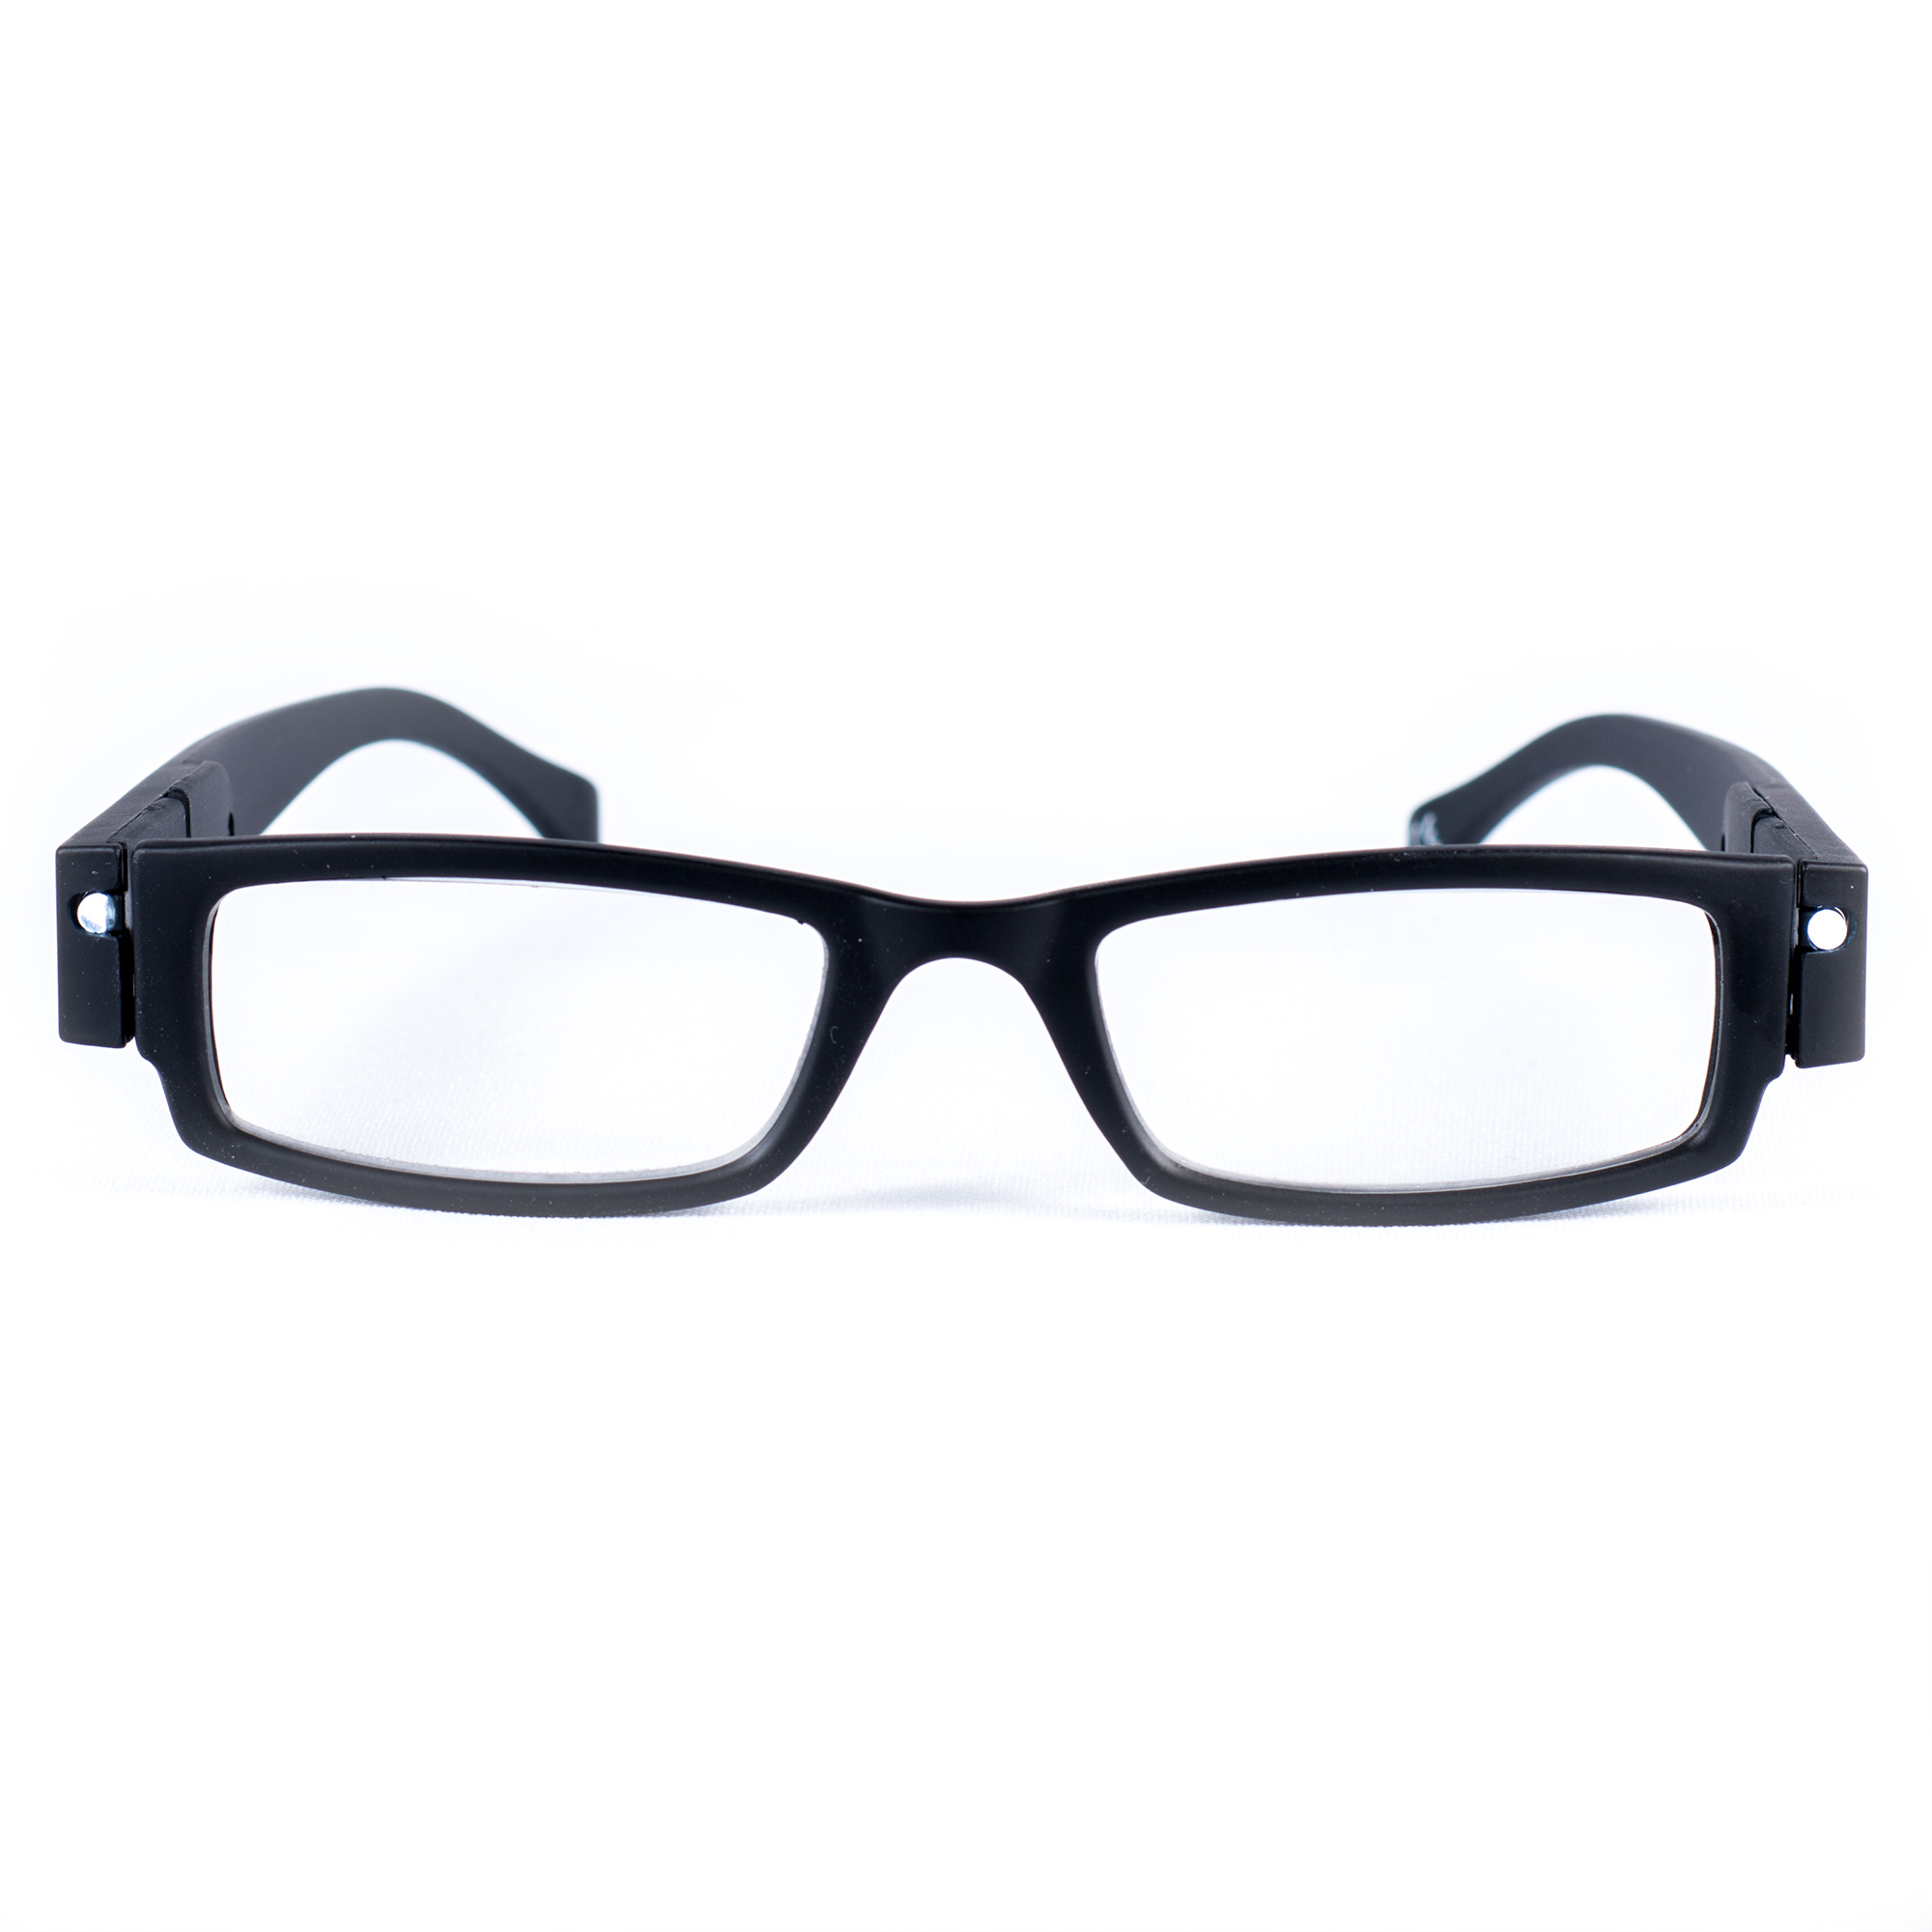 LED leesbril zwart. Leesbril met LED-verlichting.